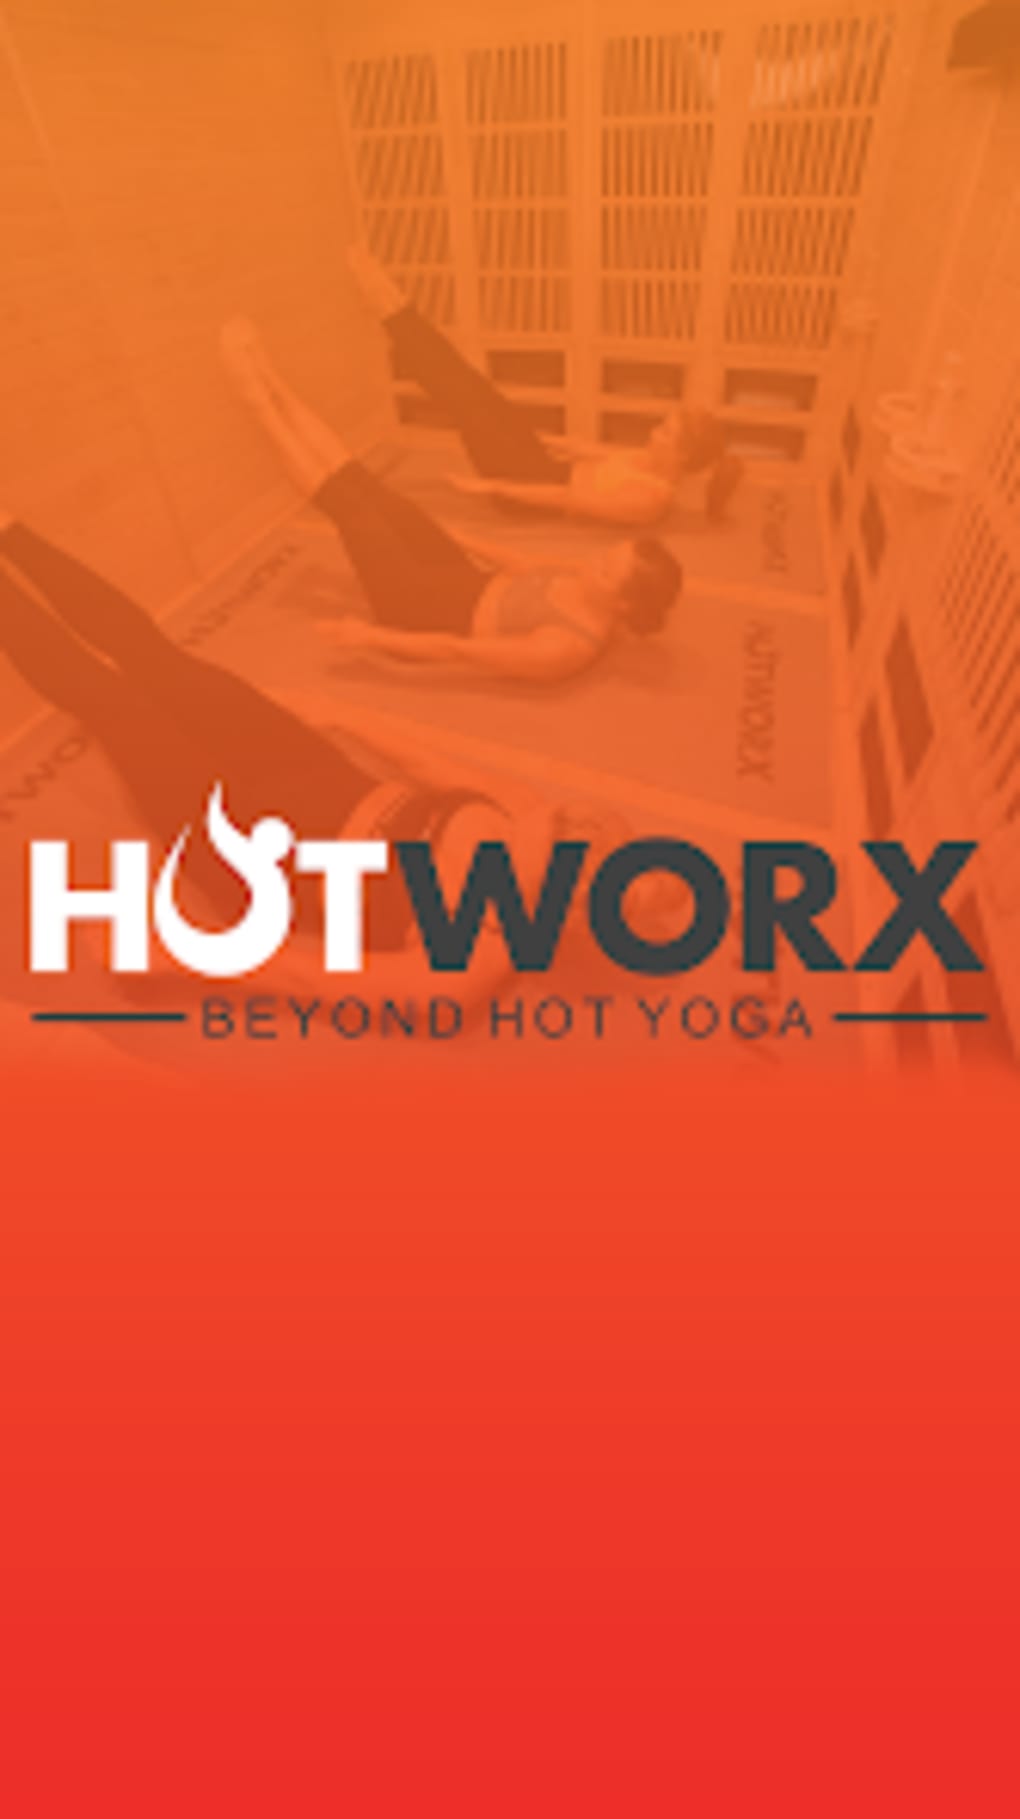 HOTWORX – Beyond Hot Yoga